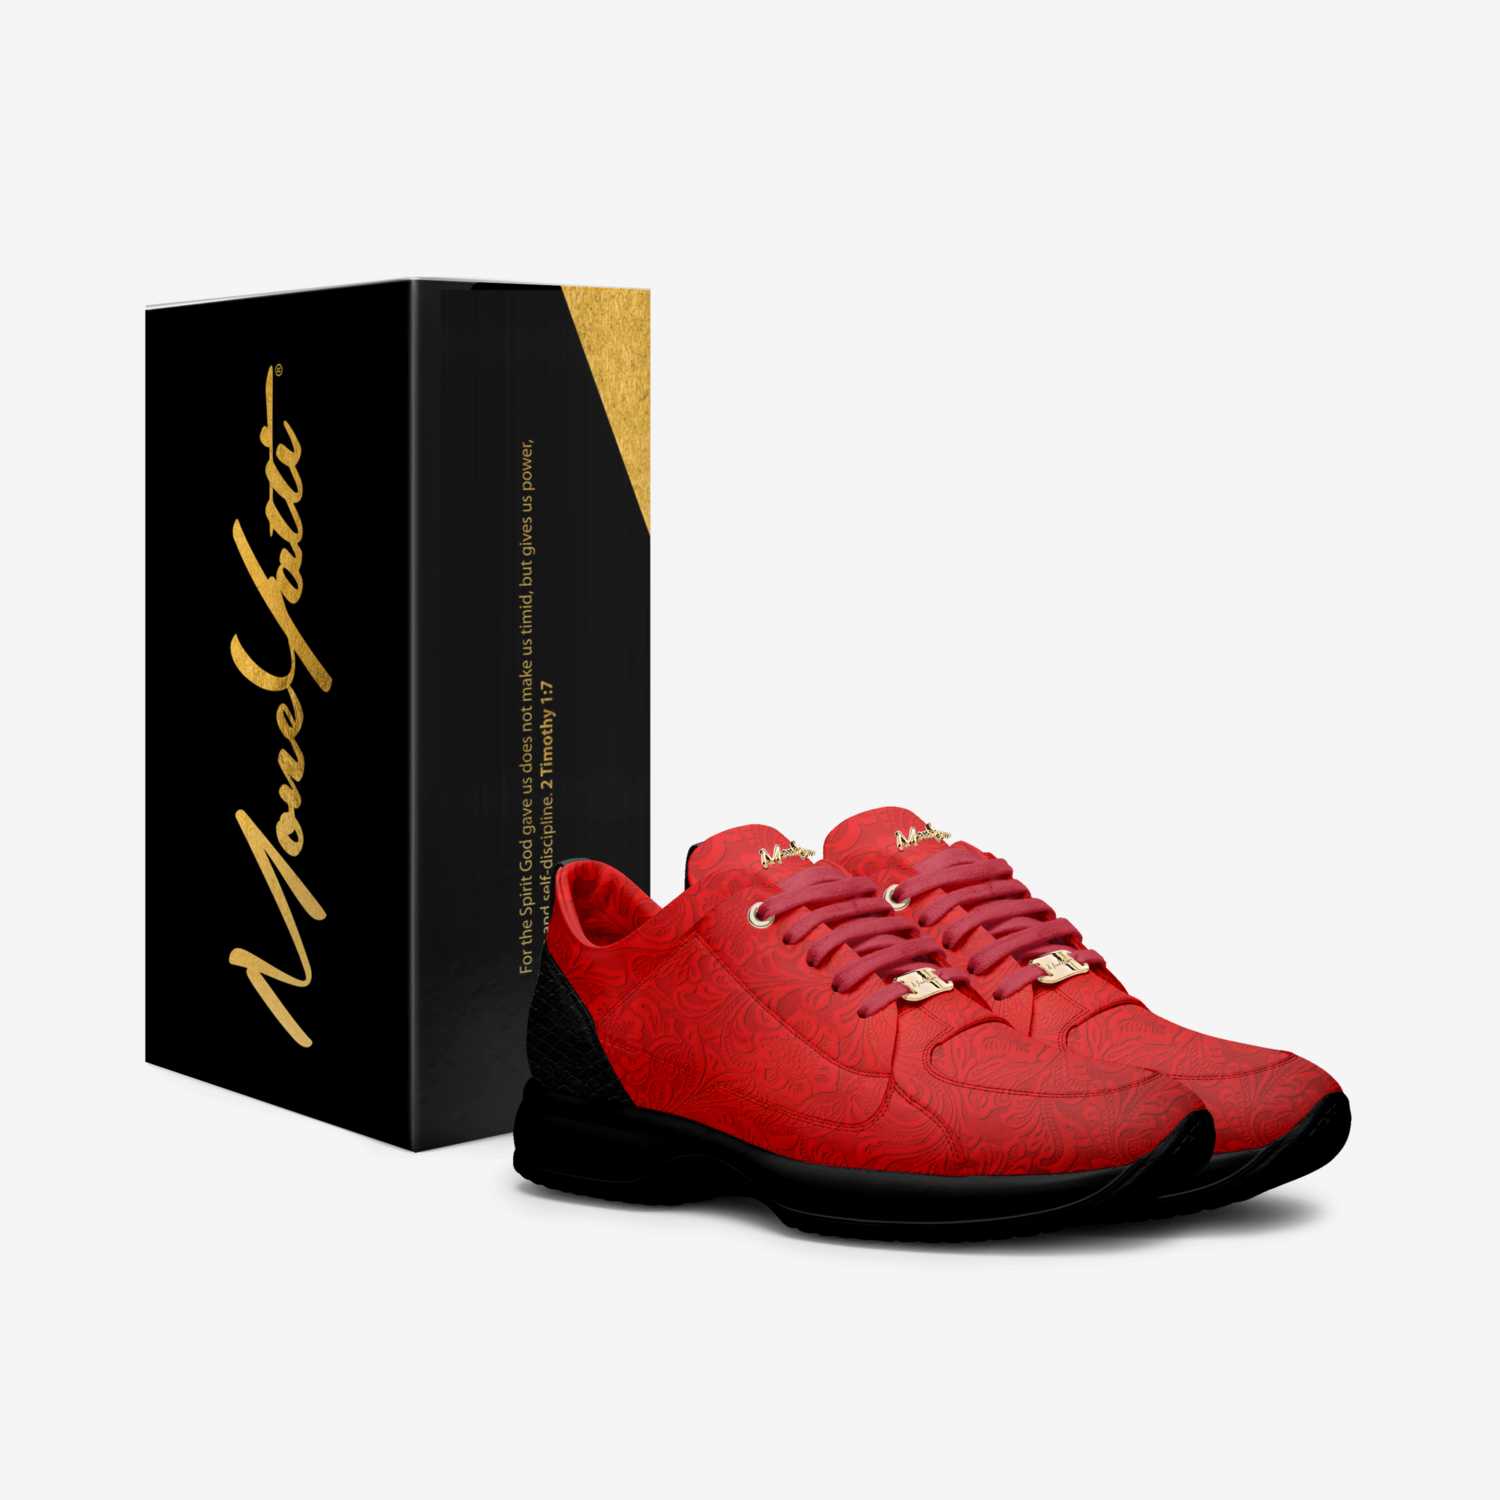 tesr 4677 custom made in Italy shoes by Moneyatti Brand | Box view